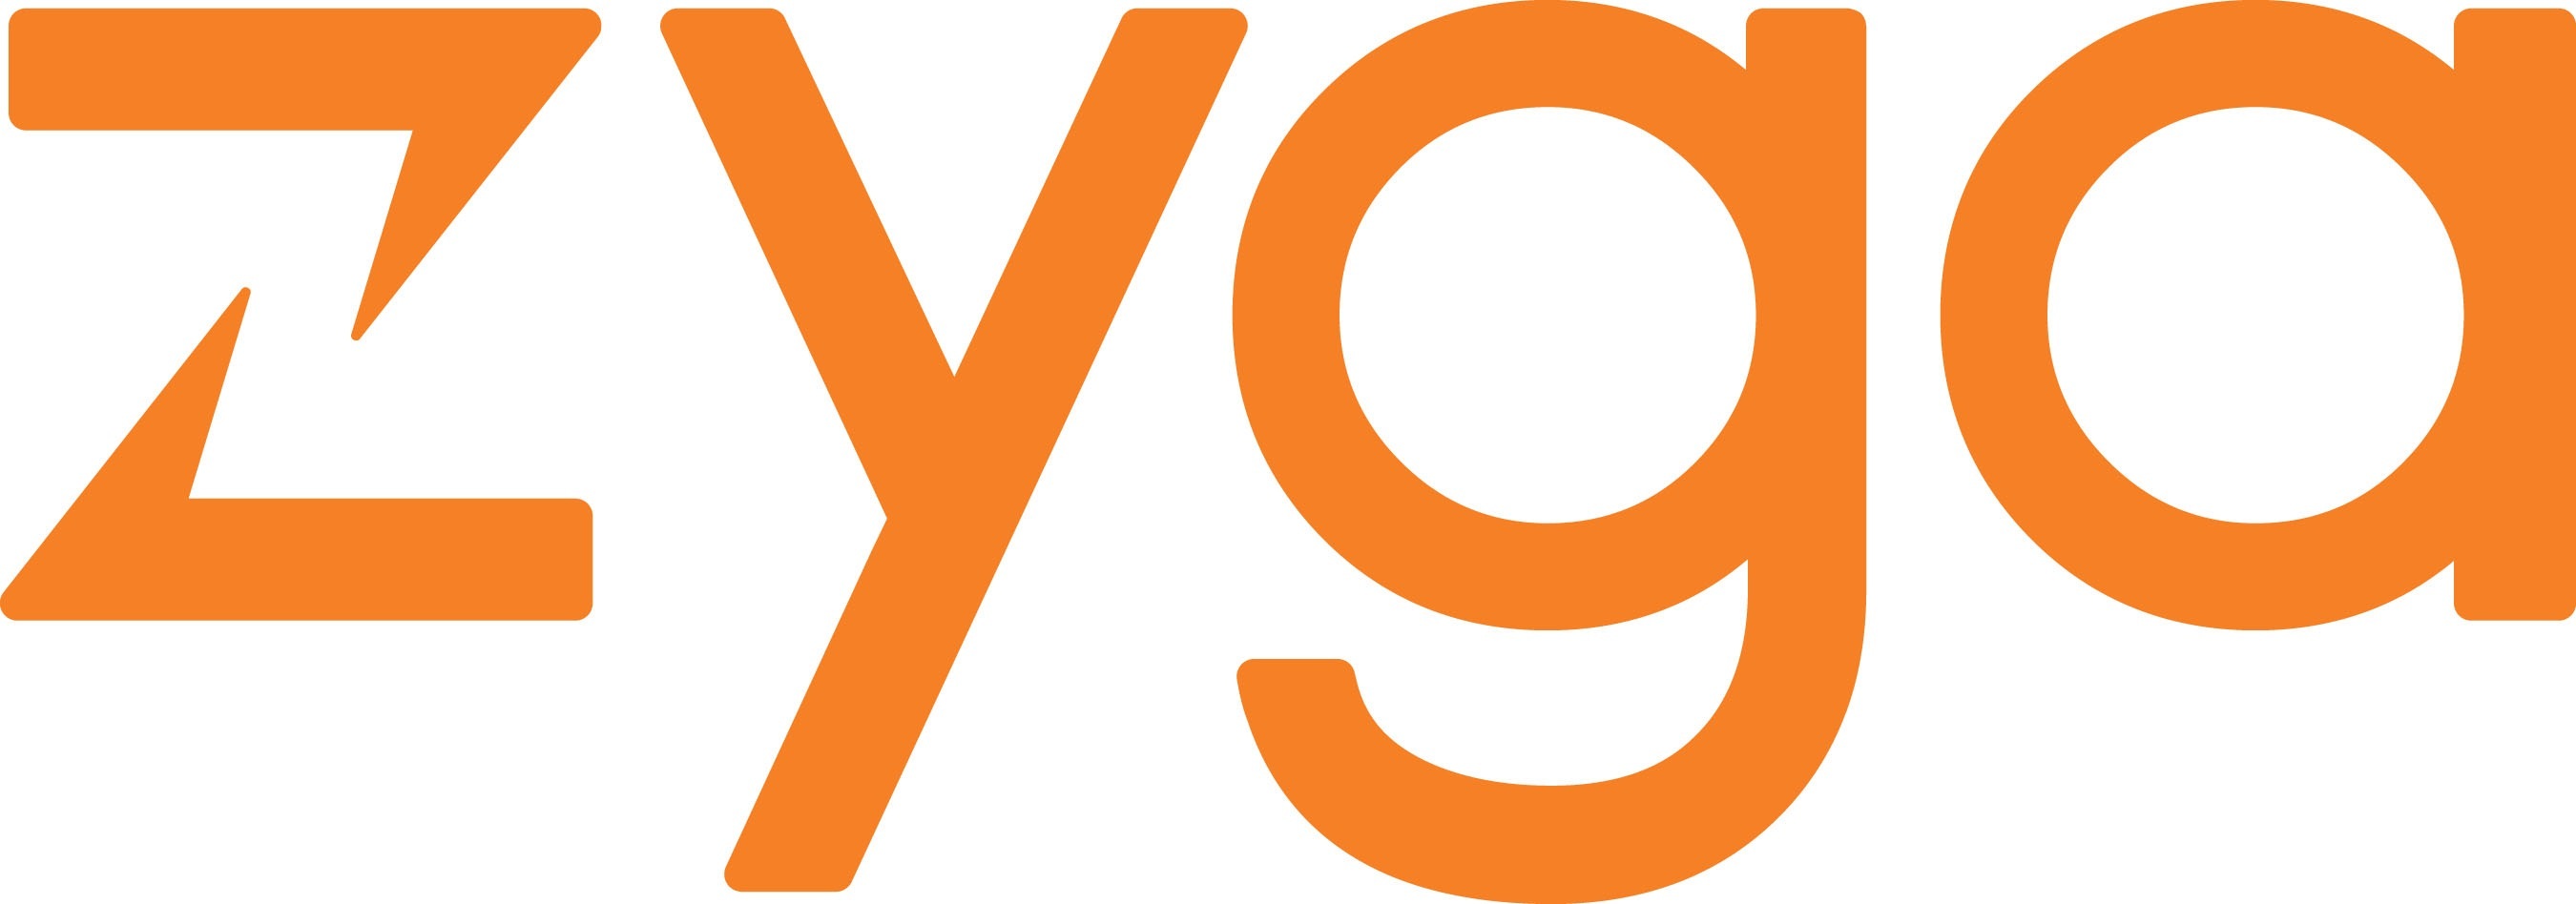 Zyga - Logo.